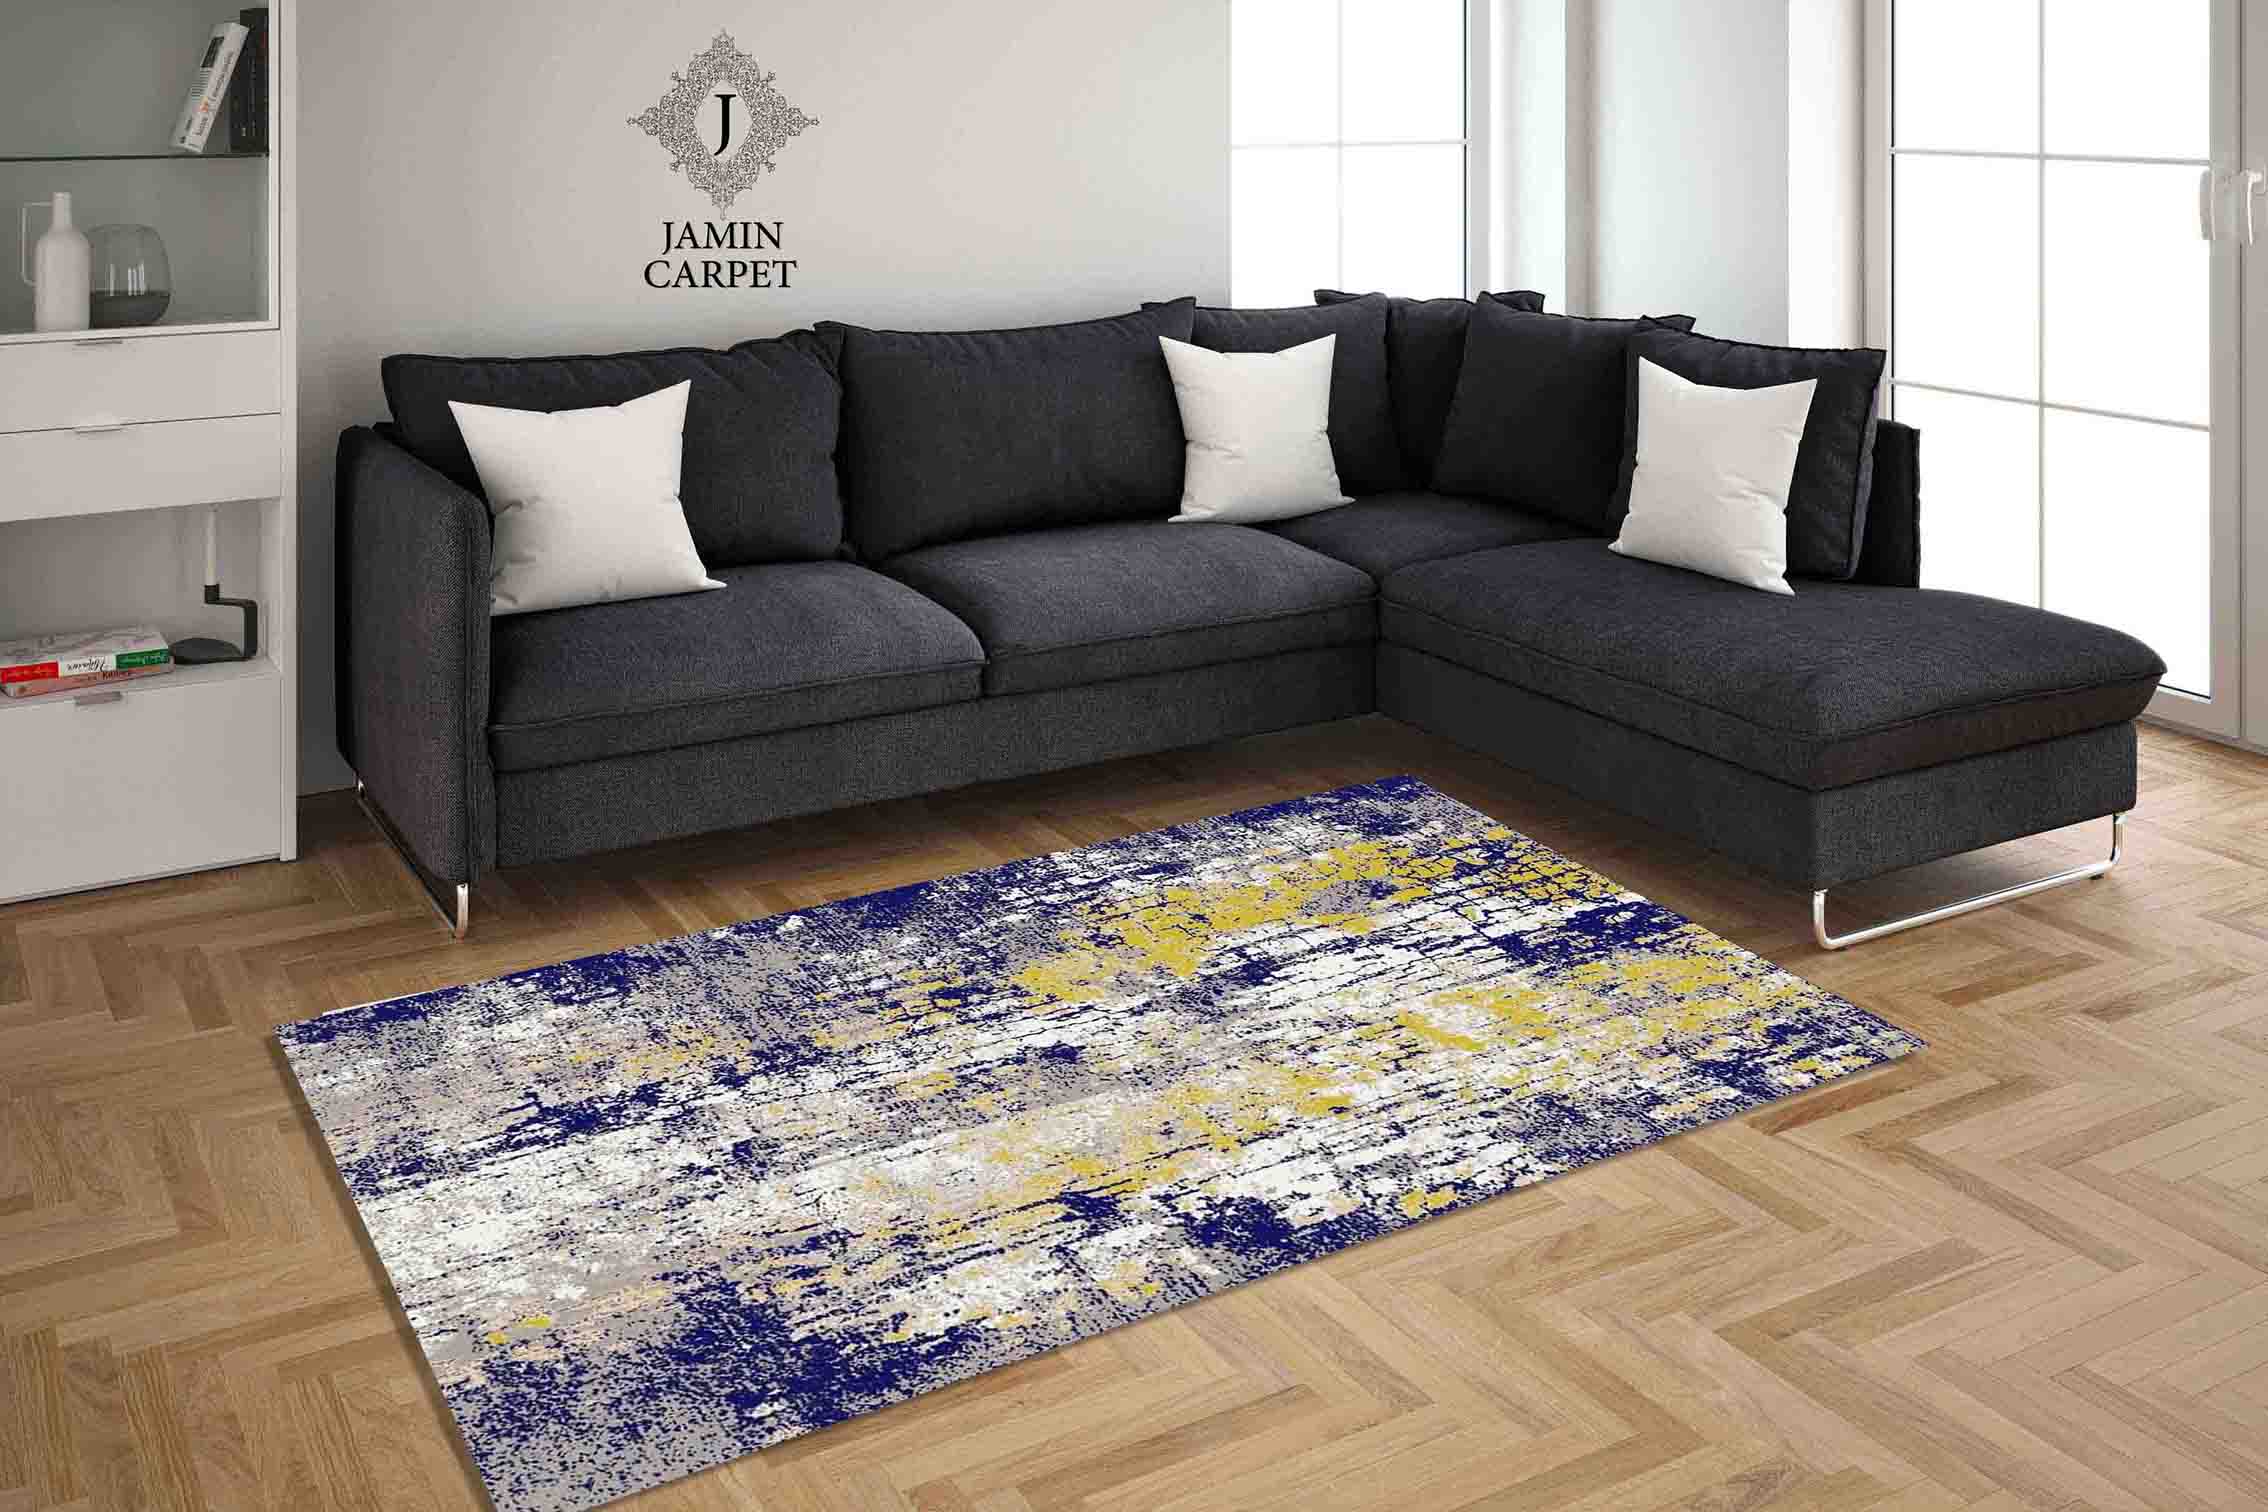 Fantasy carpet, code 246, comb 400, density 1800, all acrylic